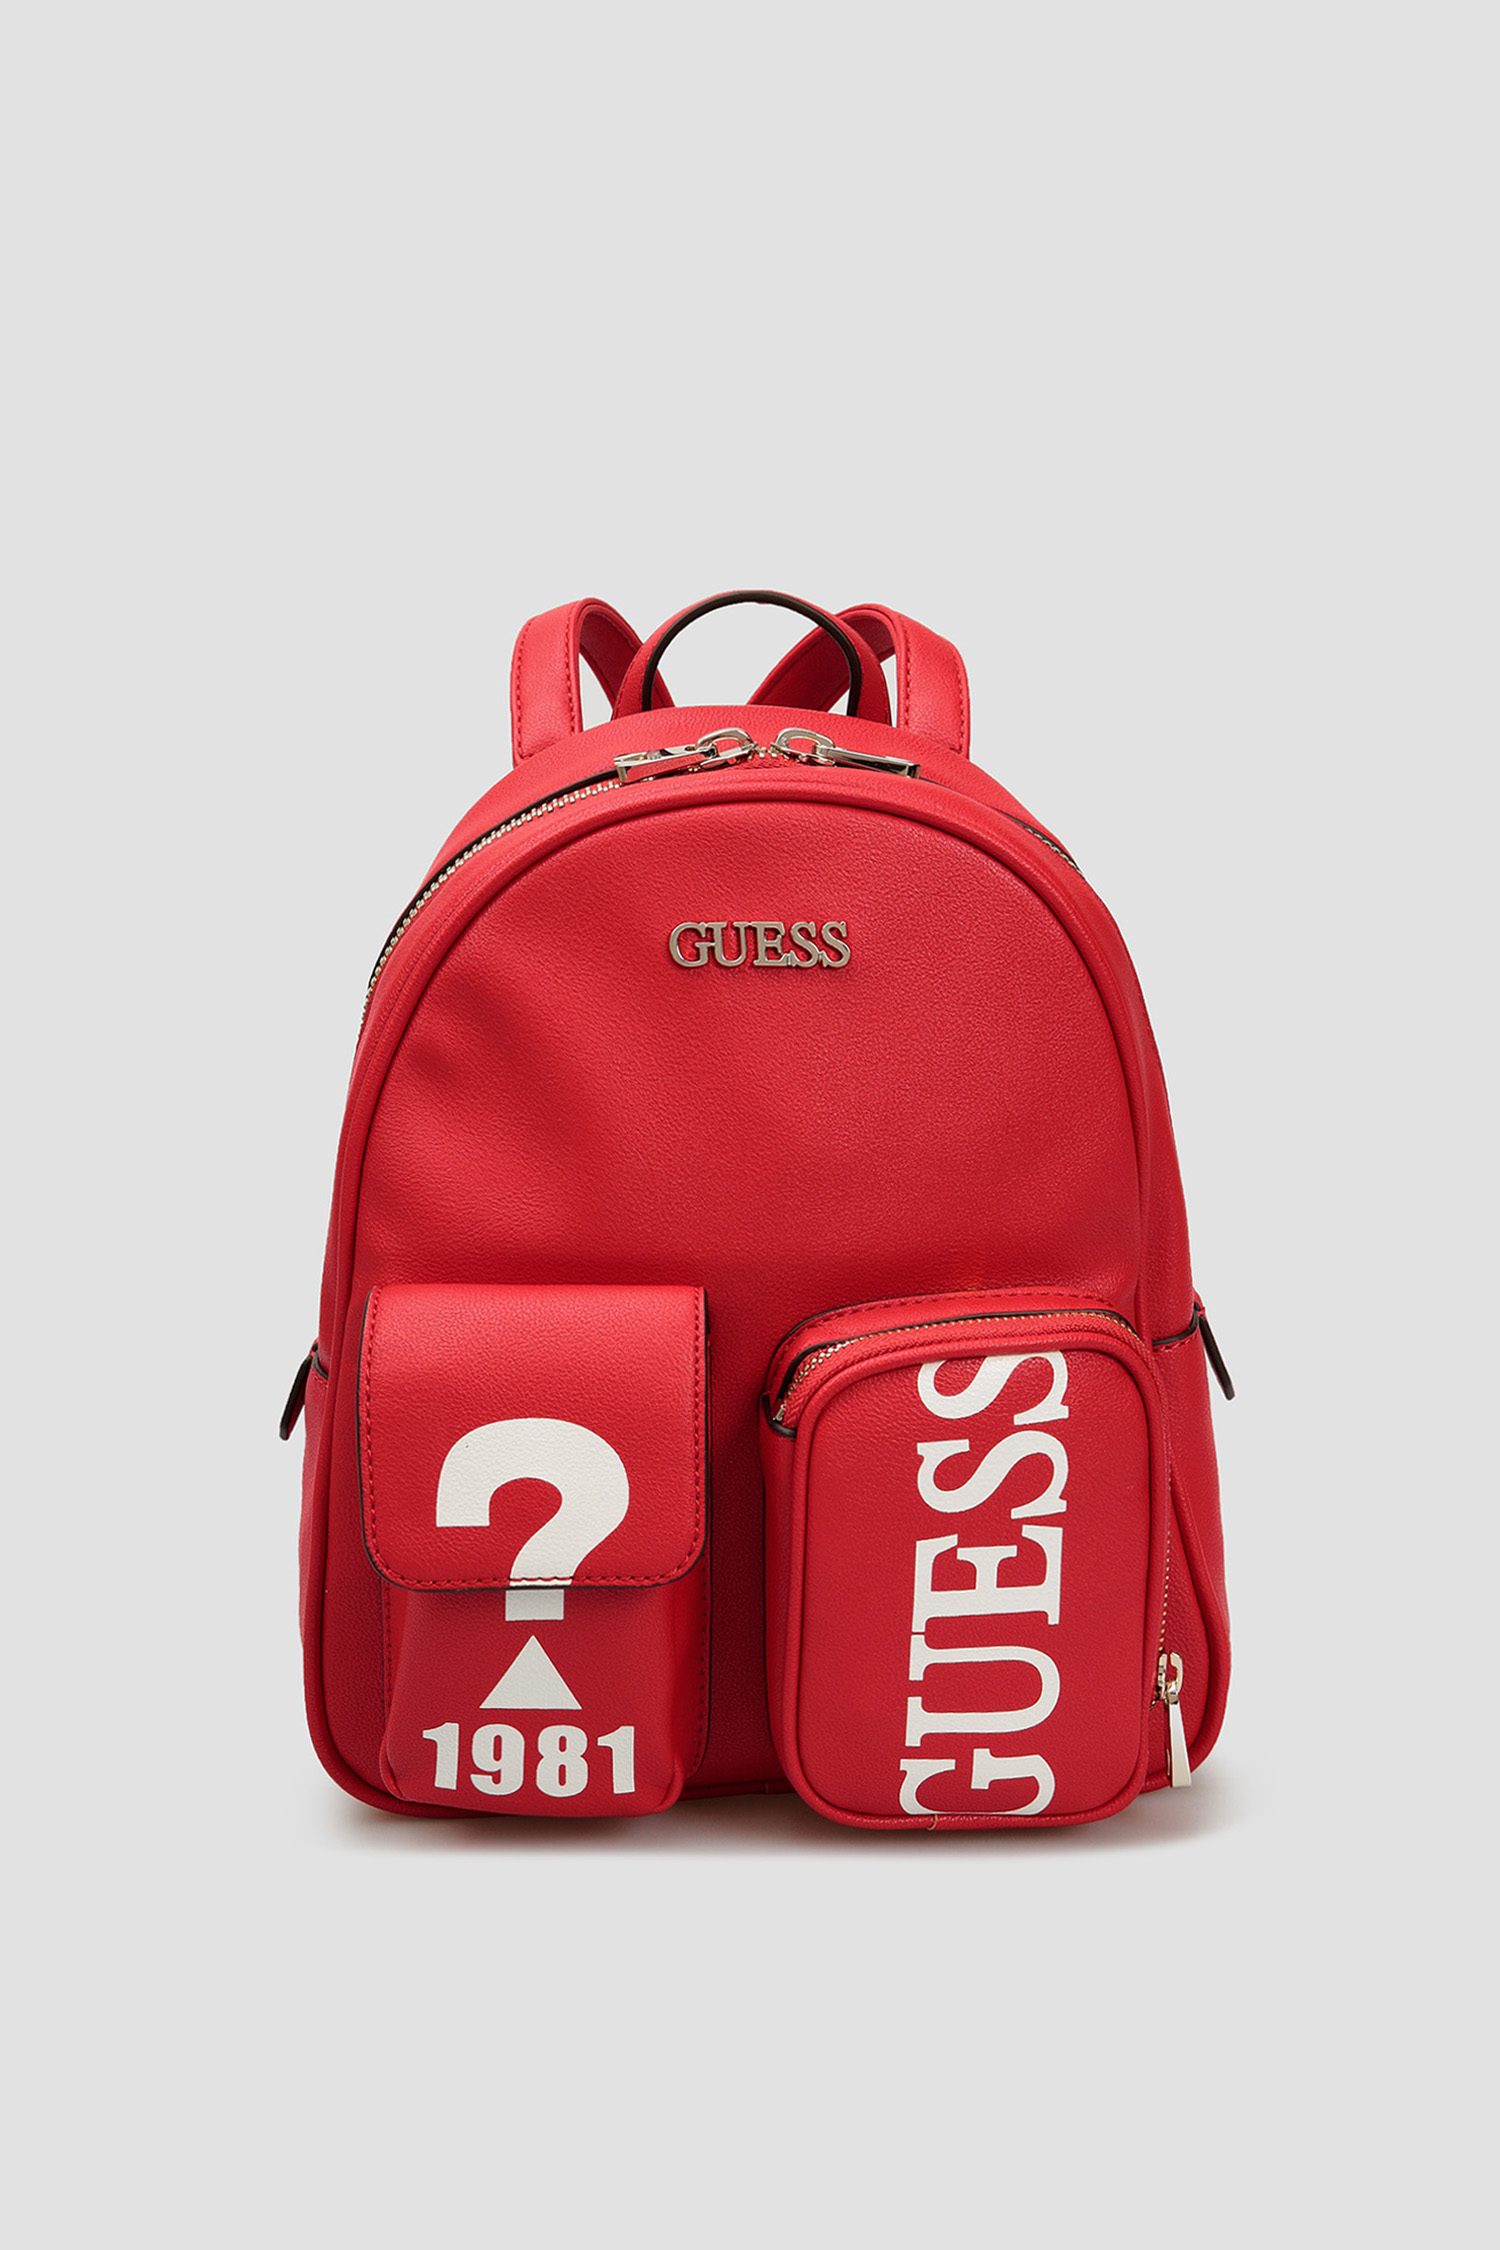 Красный рюкзак для девушек Guess HWVQ77.51320;RED